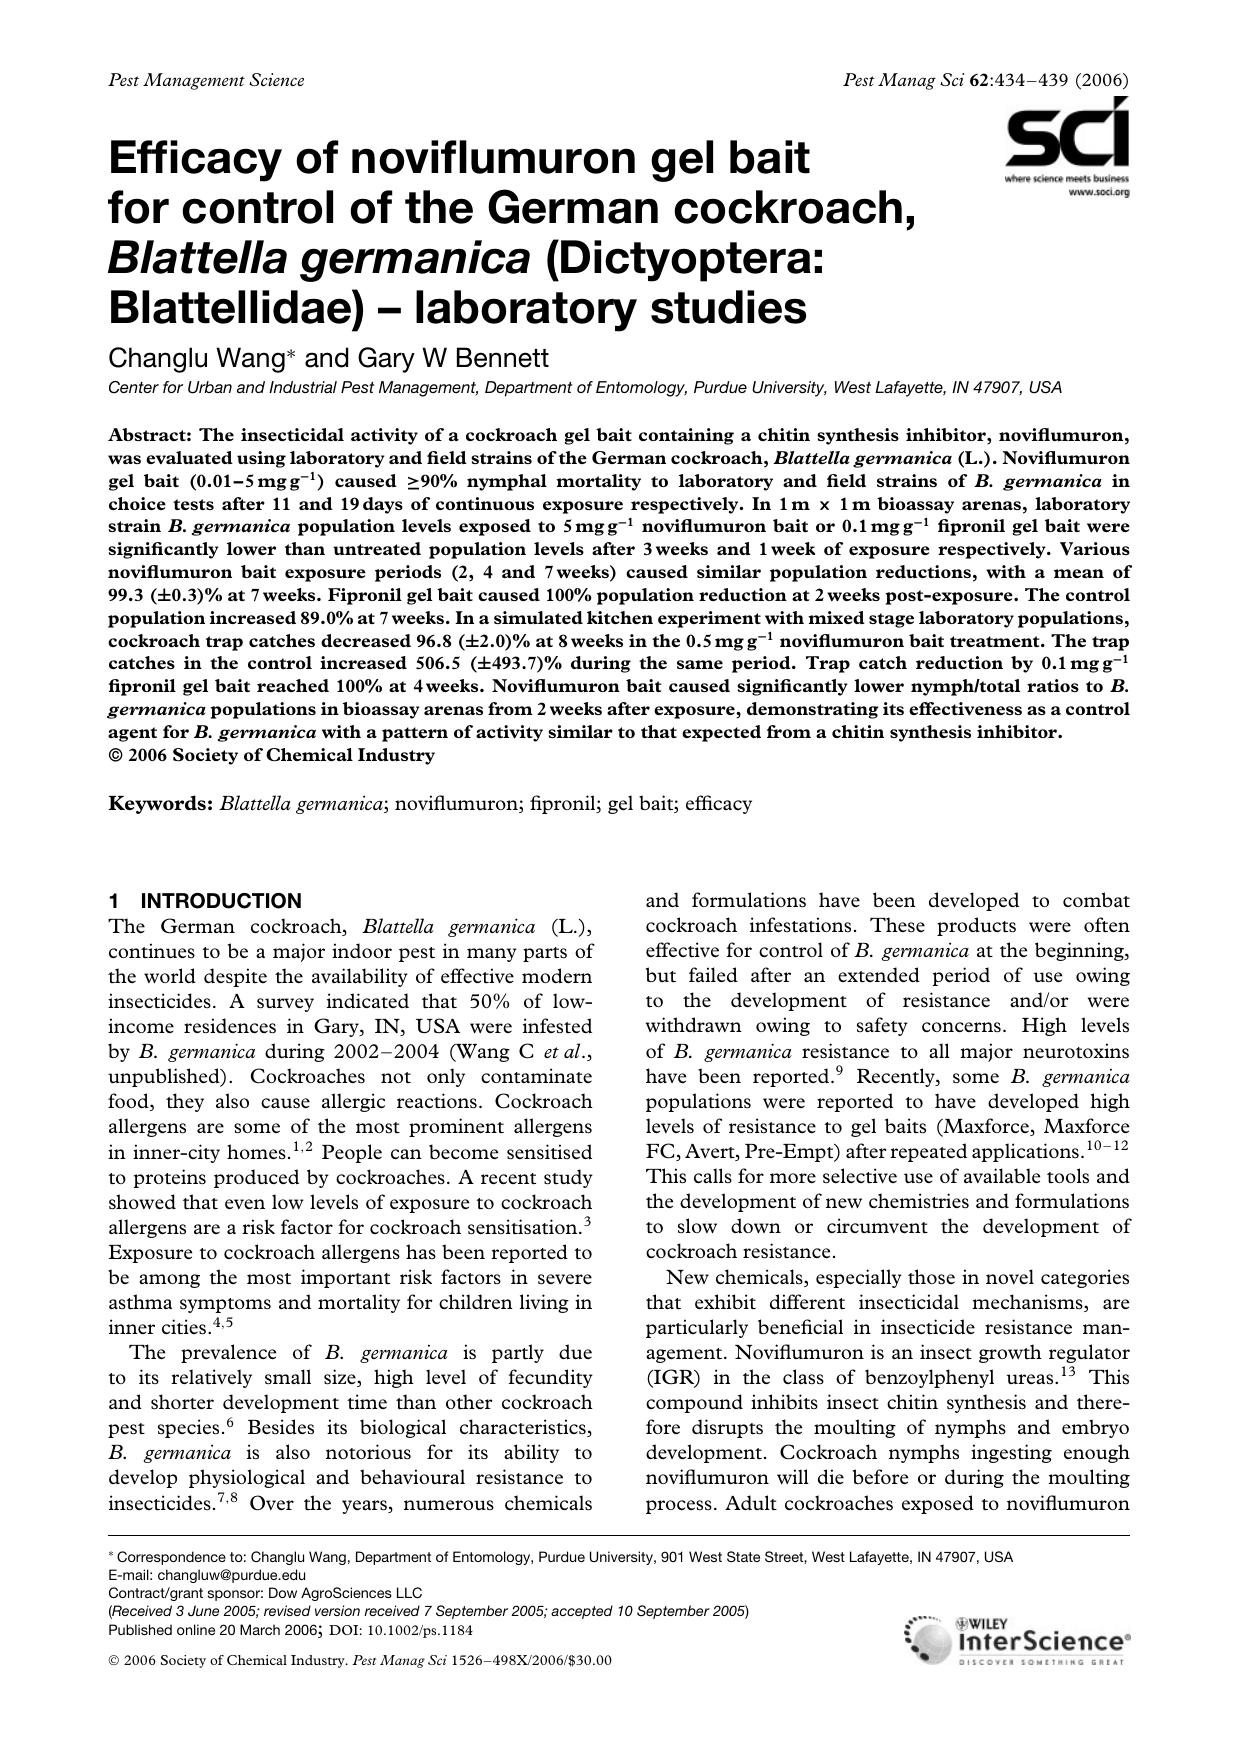 Efficacy of noviflumuron gel bait for control of the German cockroach, Blattella germanica (Dictyoptera: Blattellidae)-laboratory studies by Unknown